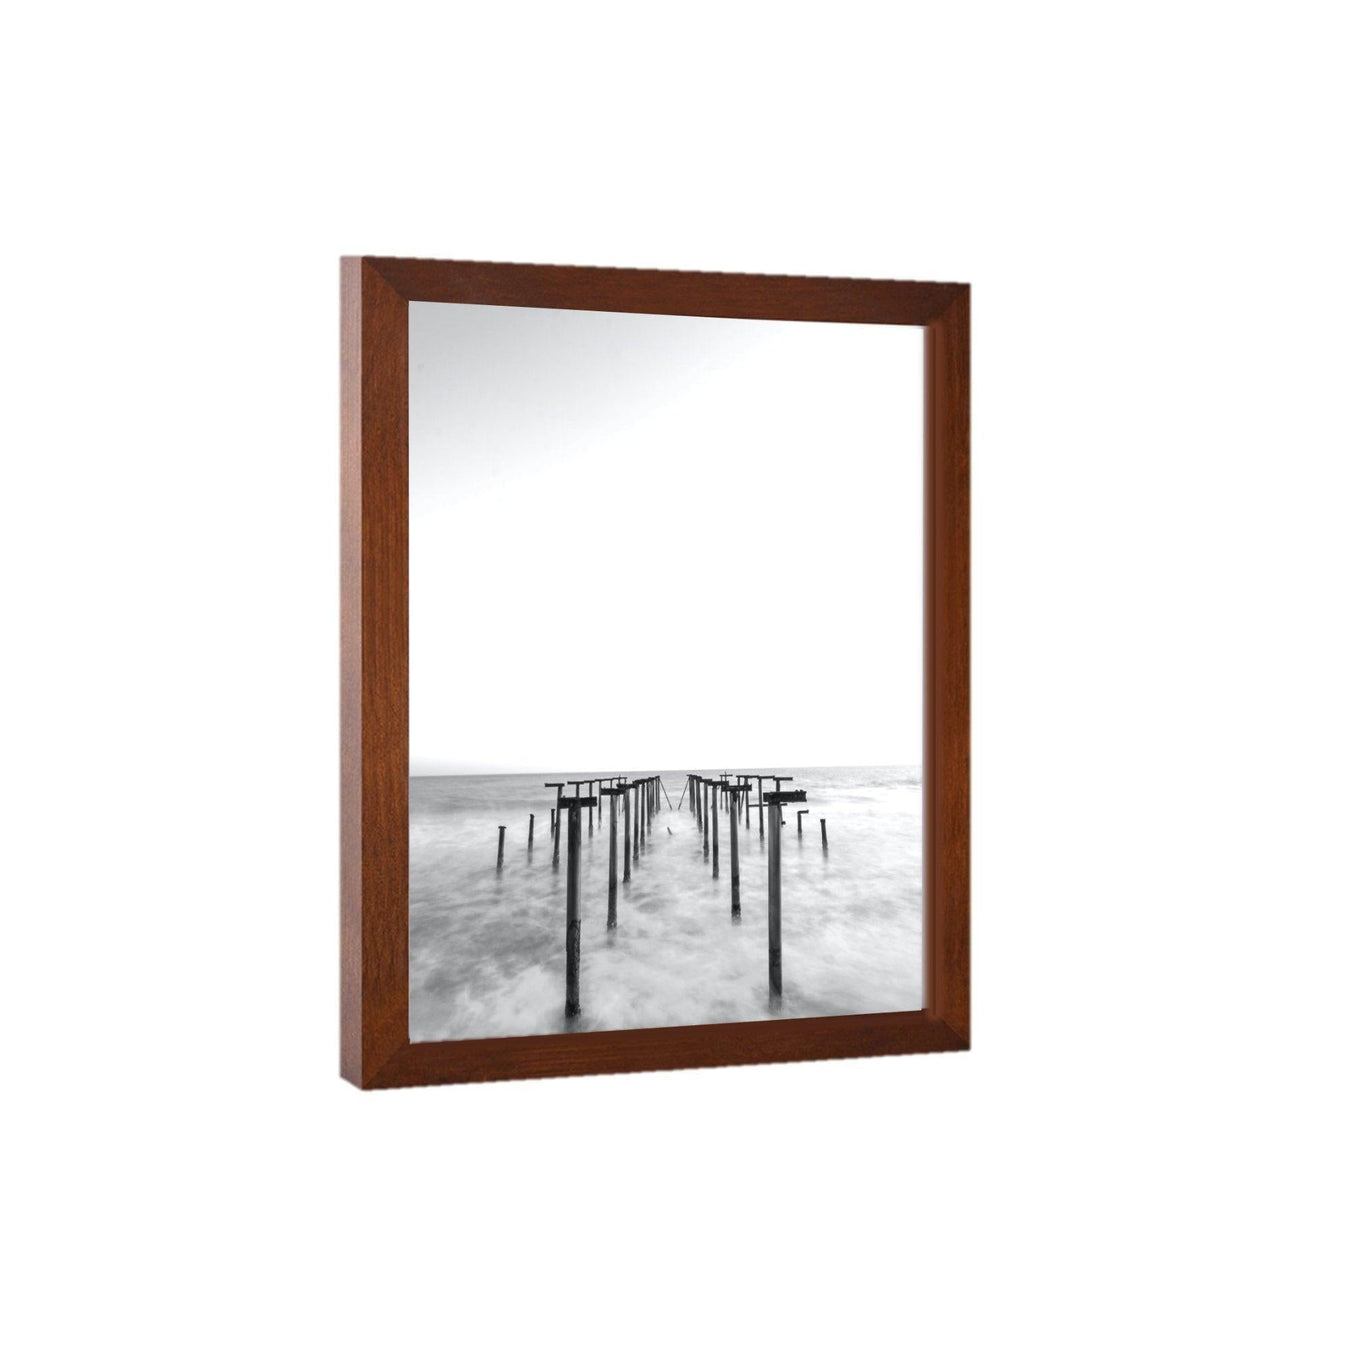 Brown Wood Picture Frames - Modern Memory Design Picture frames - New Jersey Frame Shop Custom Framing